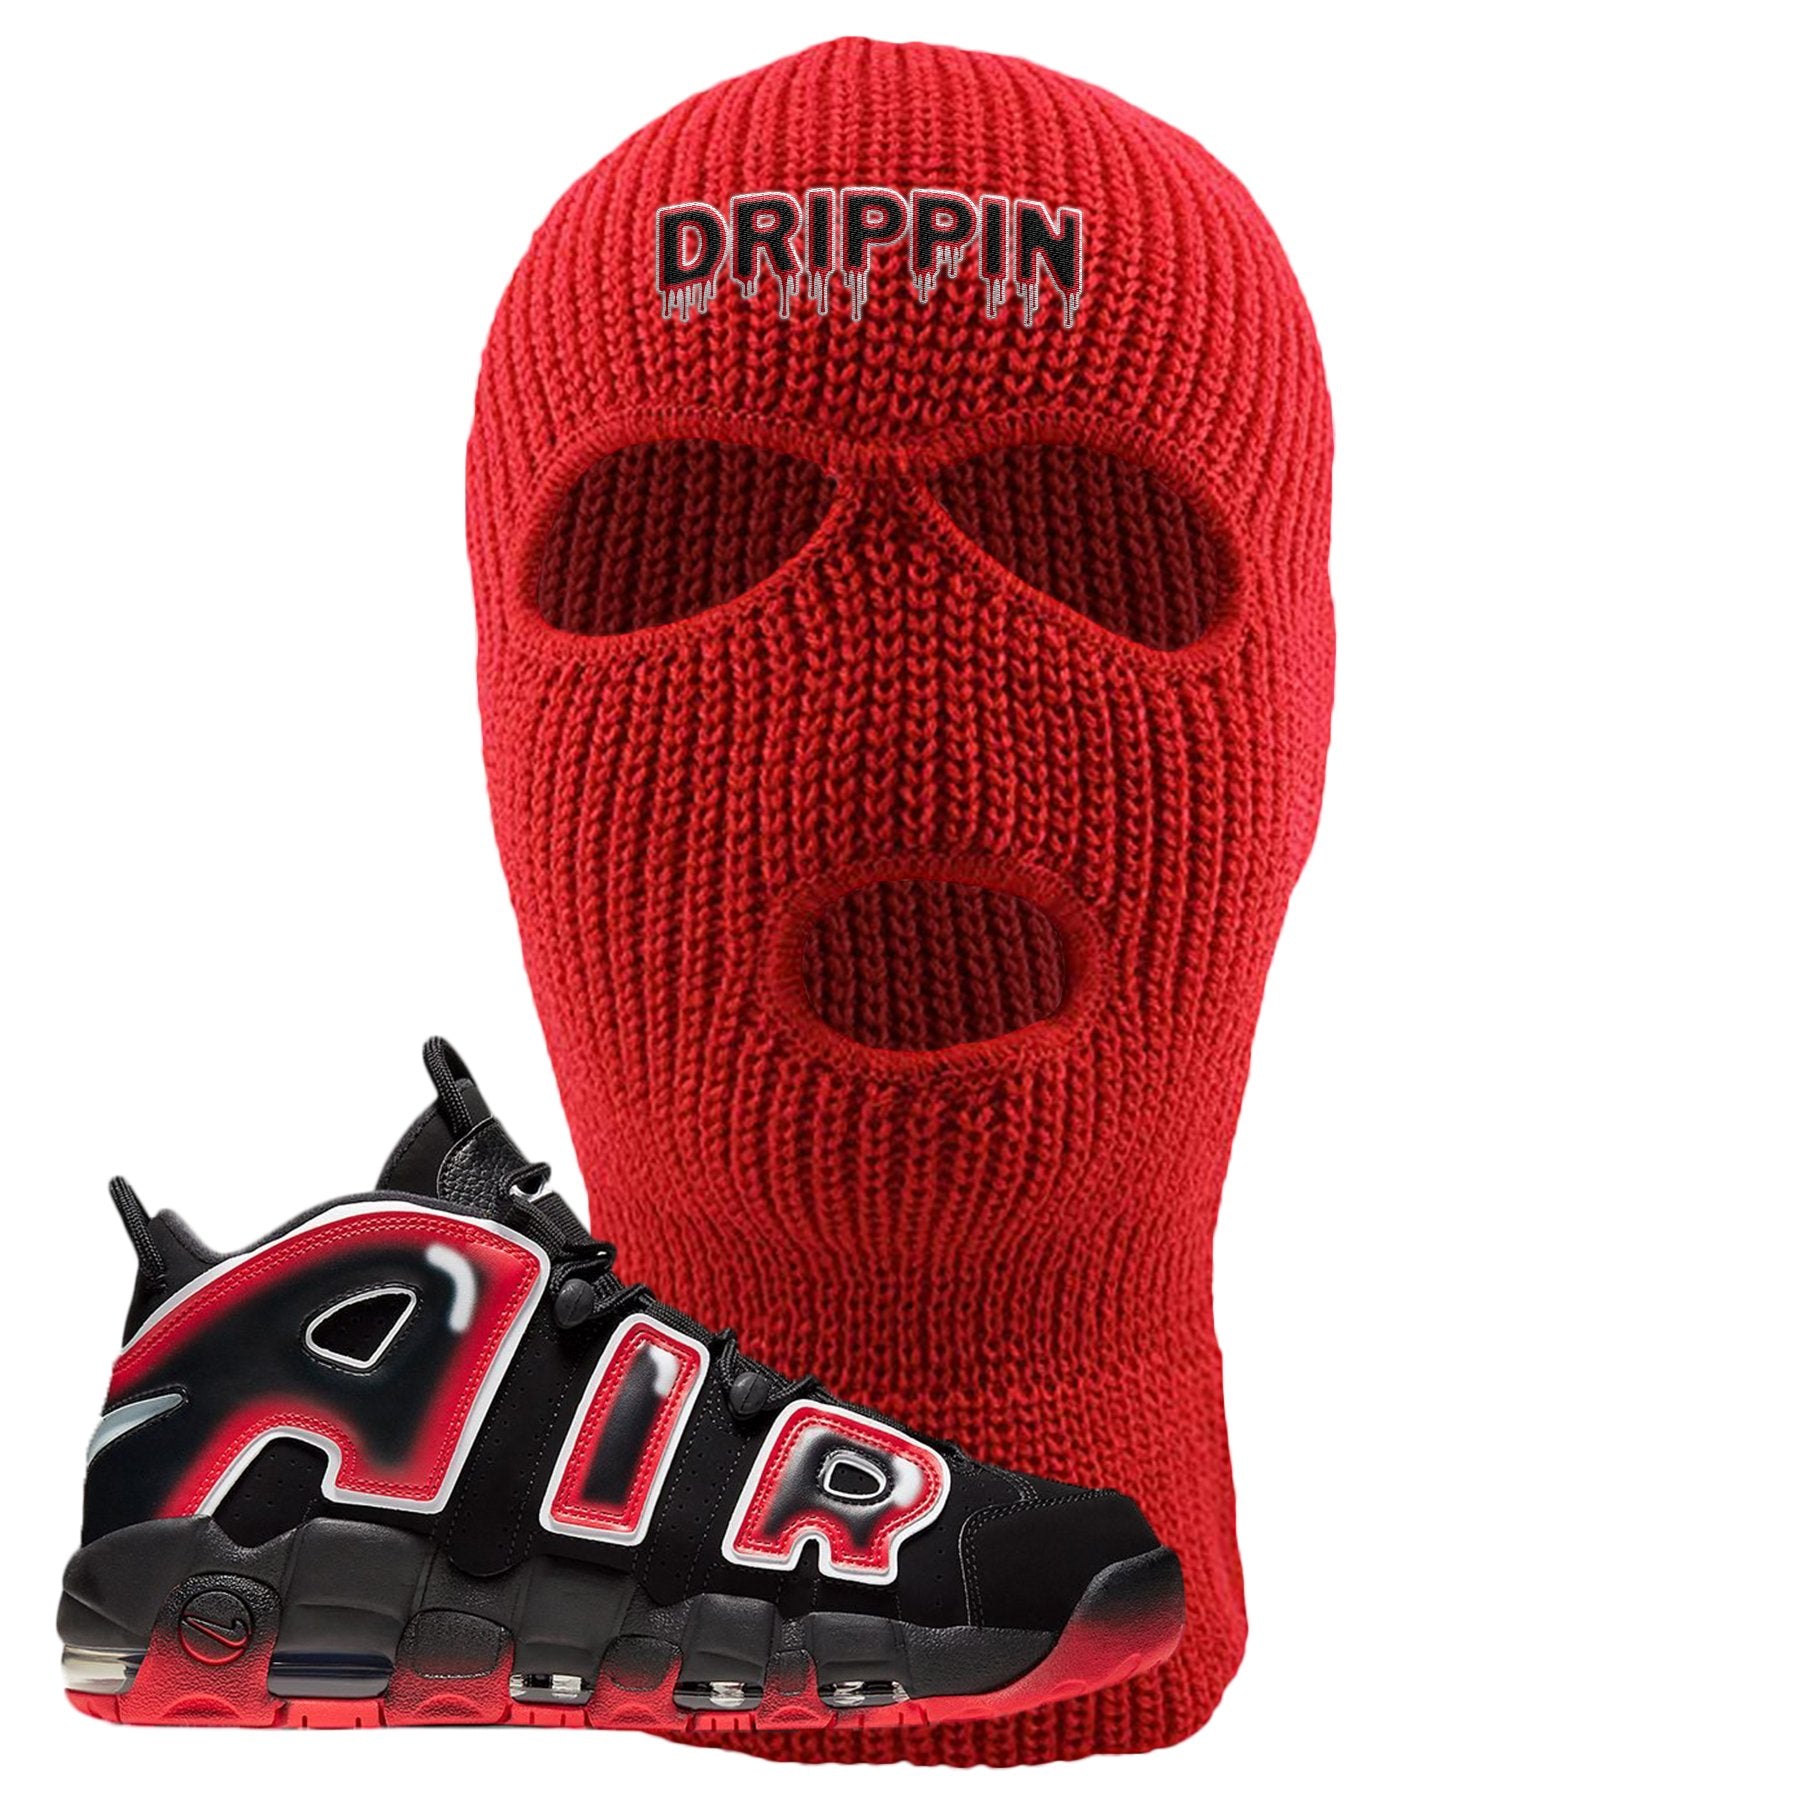 Nike Air More Uptempo Laser Crimson Drippin Red Sneaker Hook Up Ski Mask